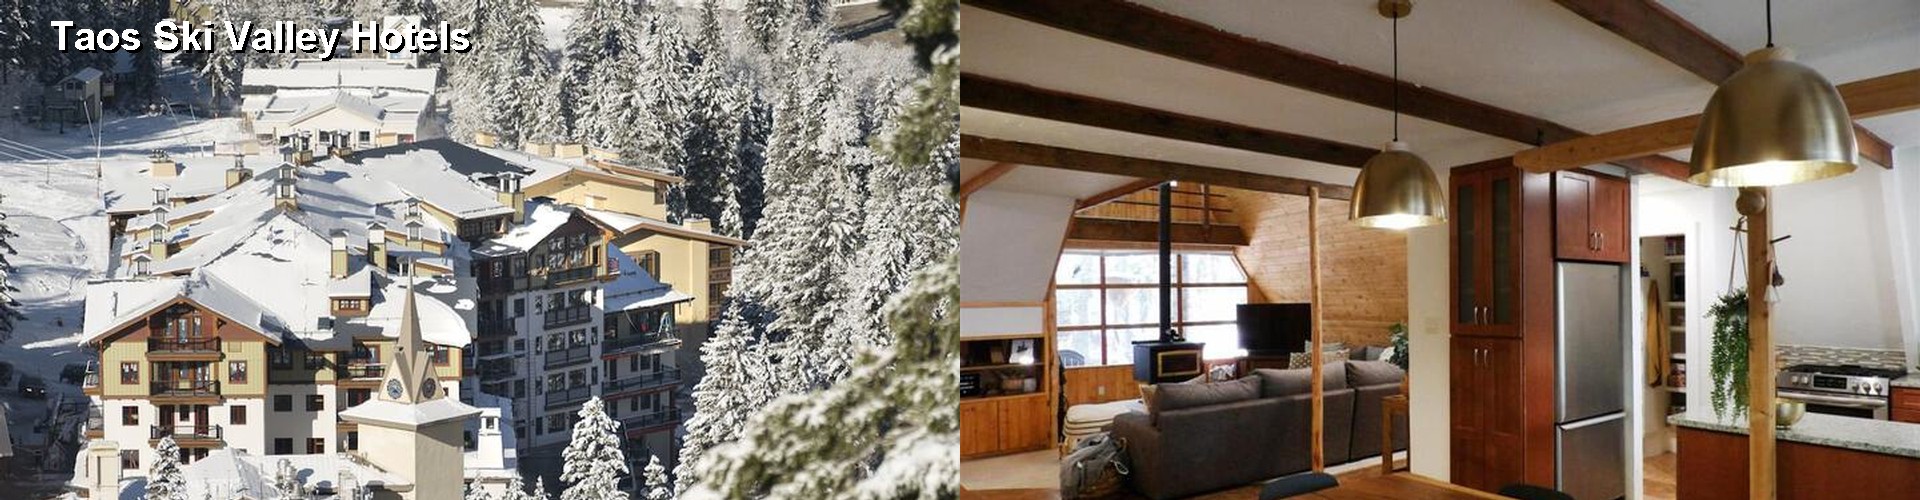 5 Best Hotels near Taos Ski Valley